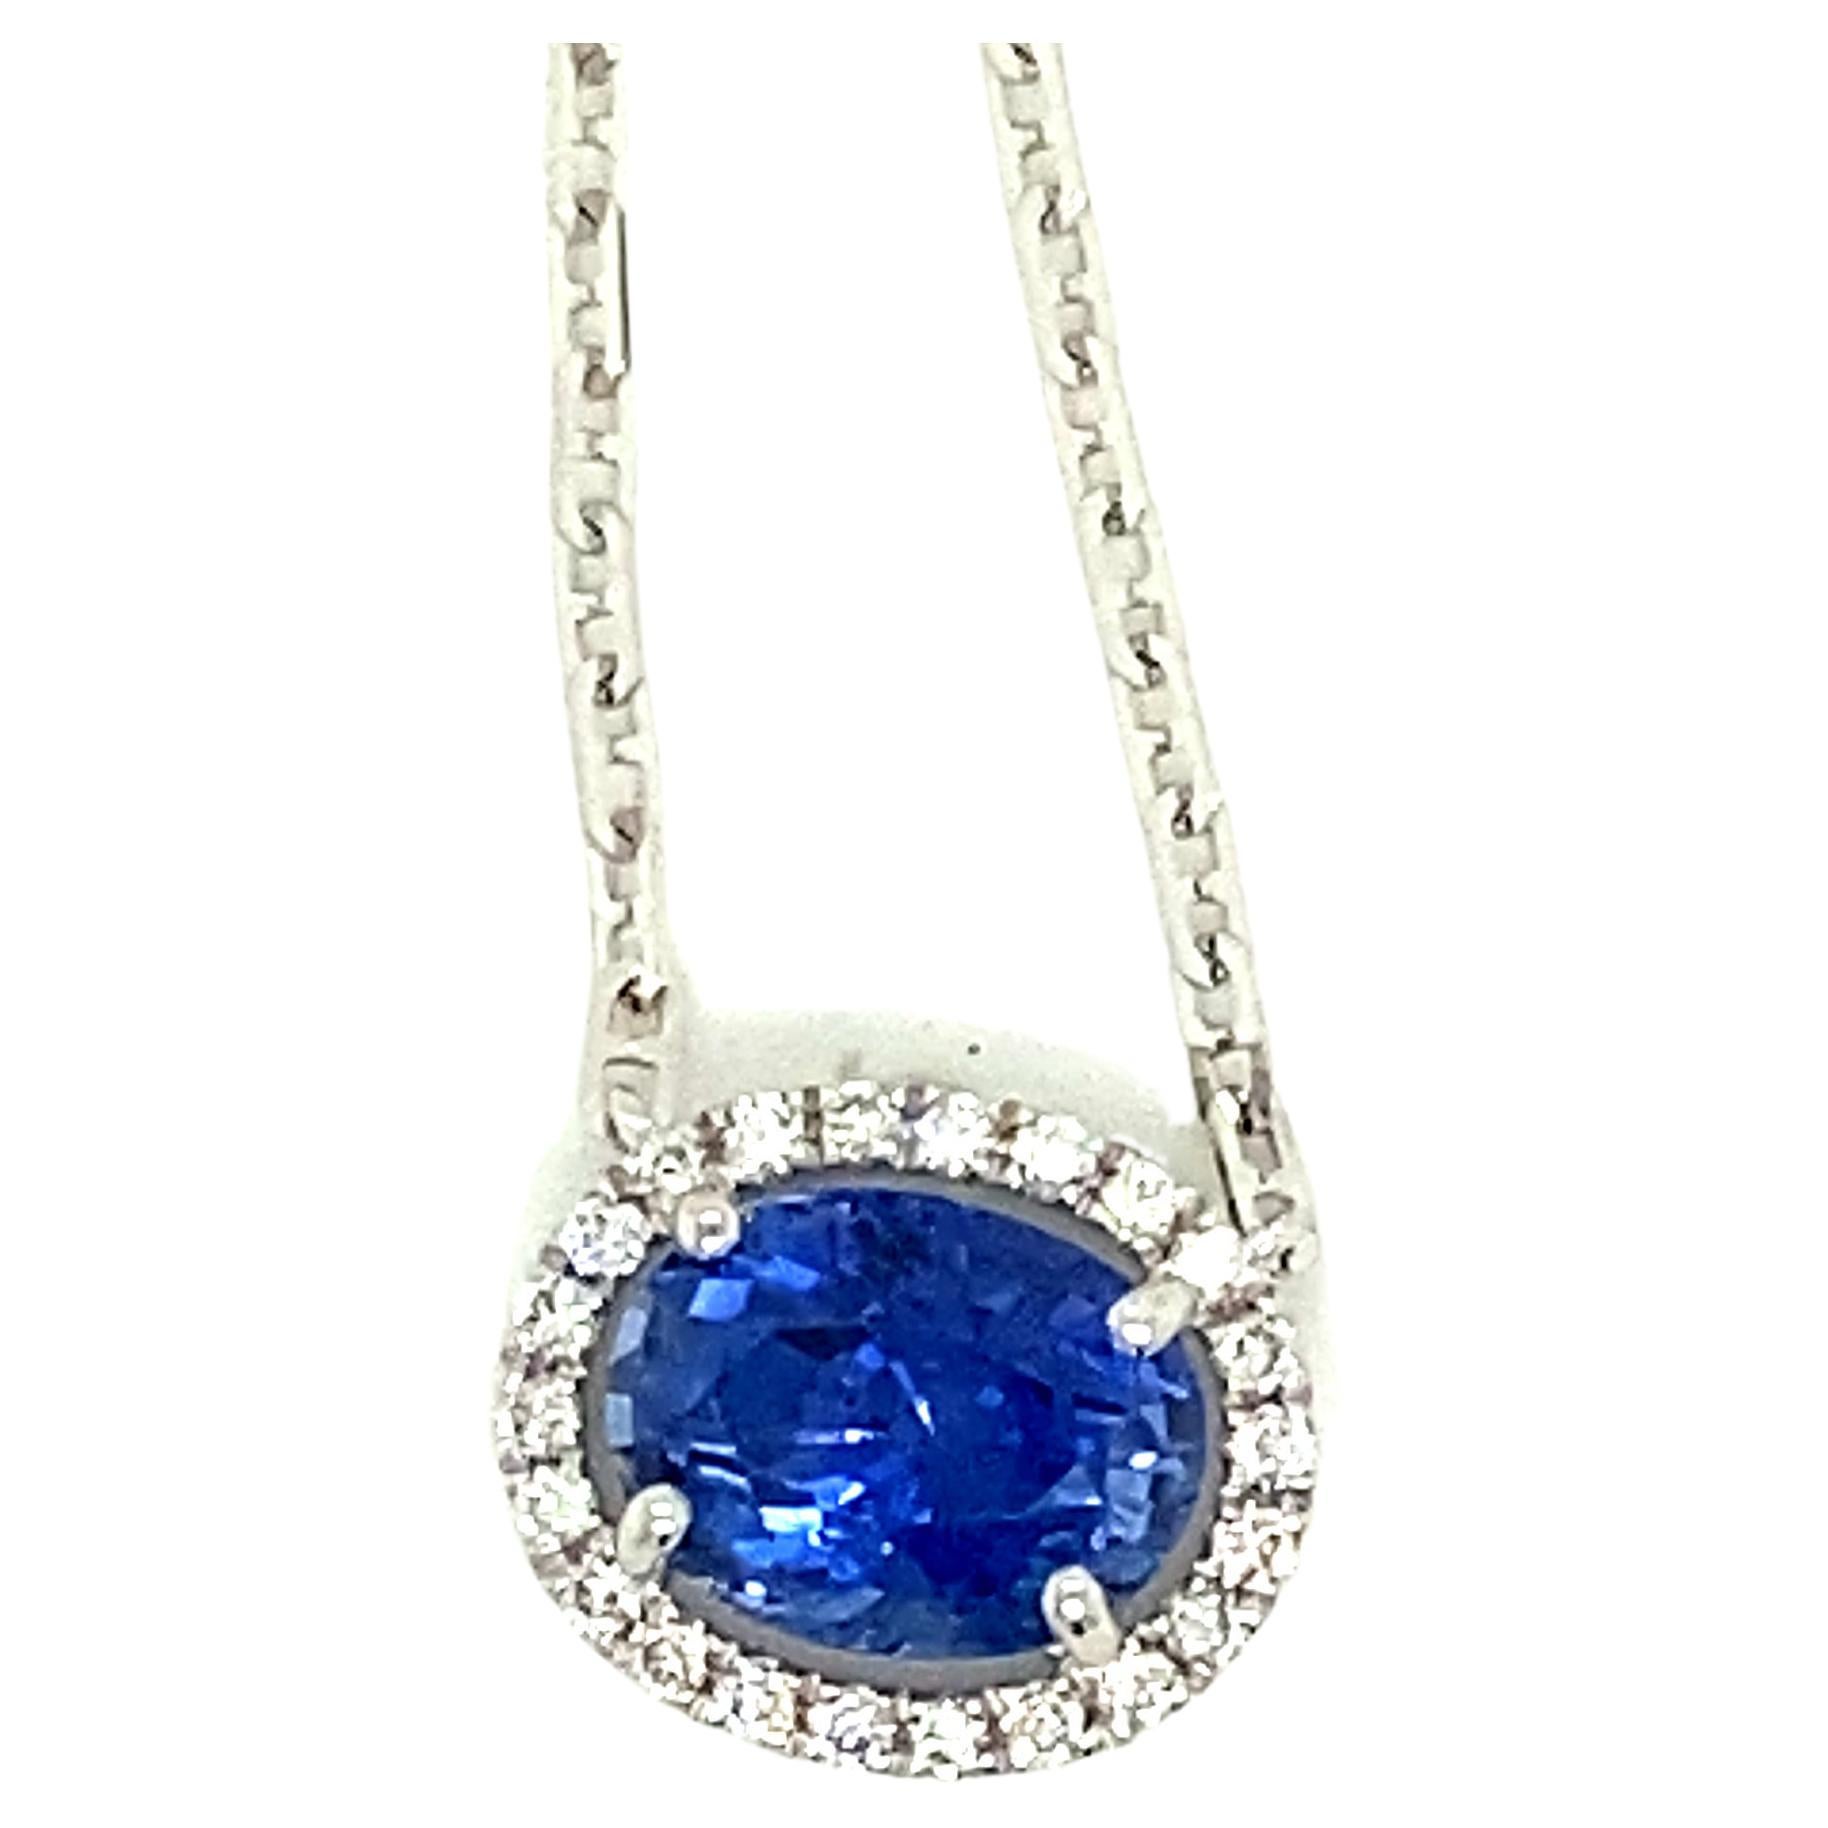 1.82Carat Vivid Blue Sapphire and Diamond Pendant Necklace For Sale